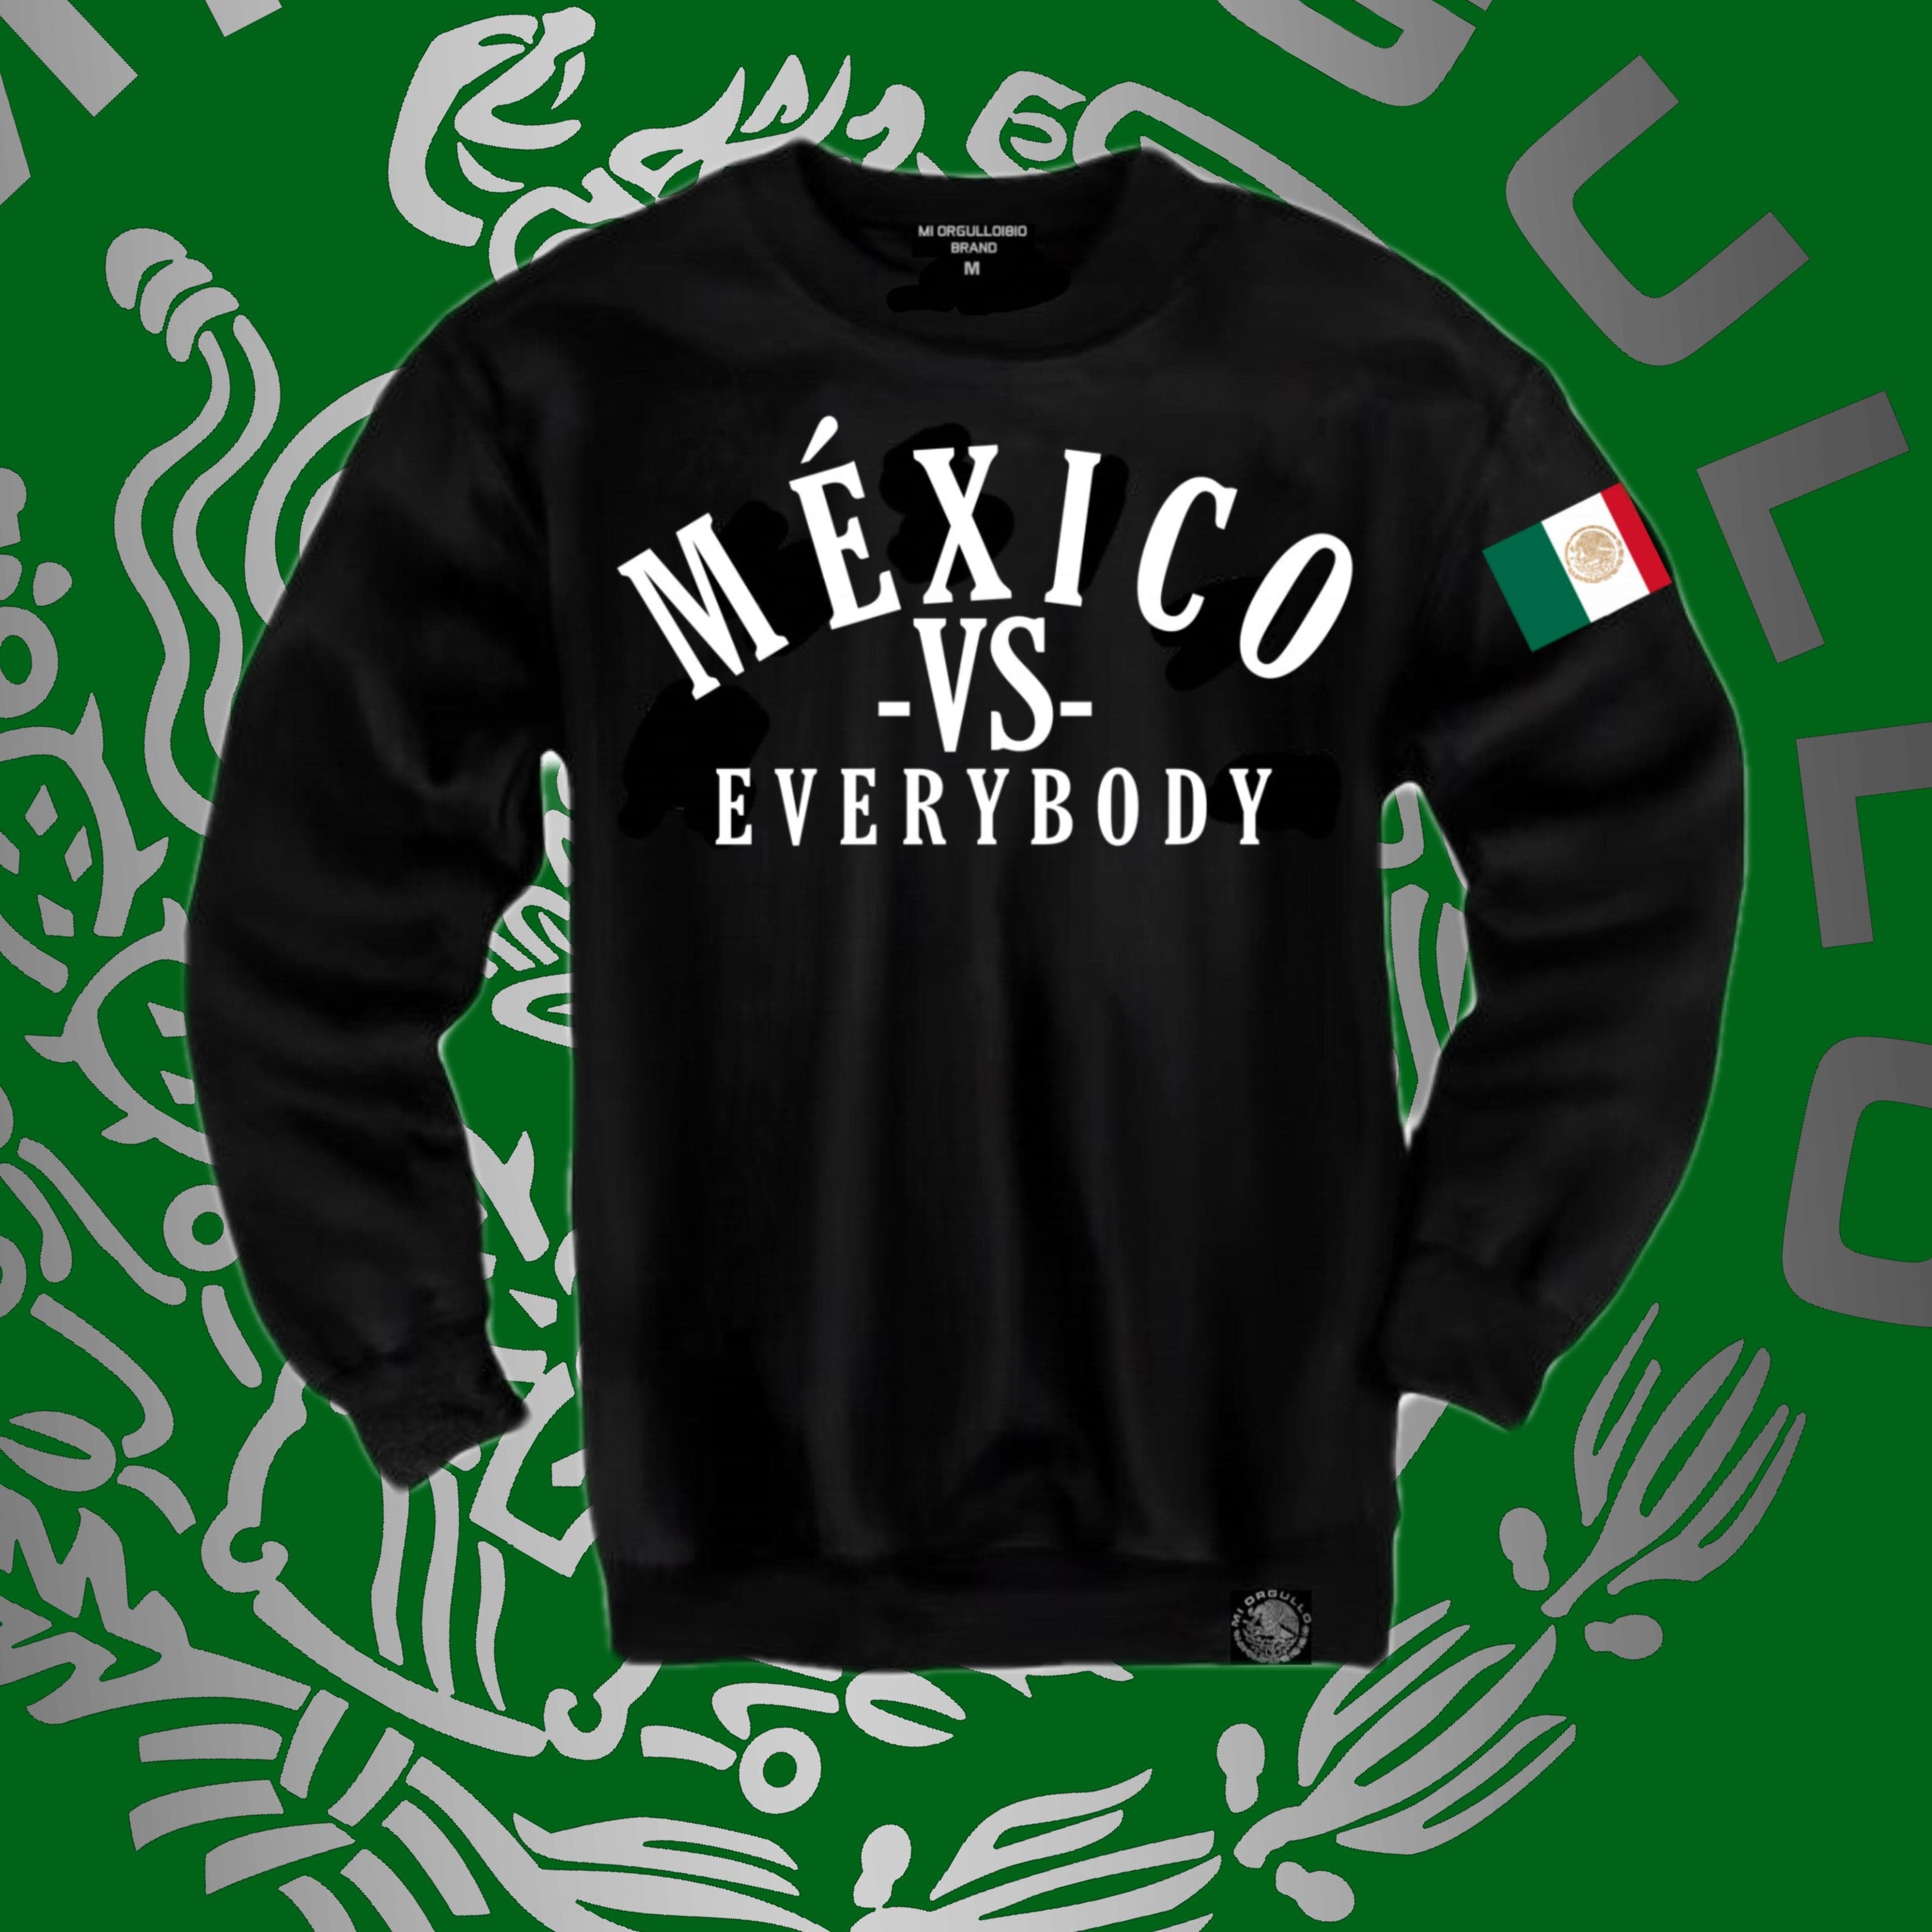 MÉXICO VS EVERYBODY BLACK SWEATSHIRT